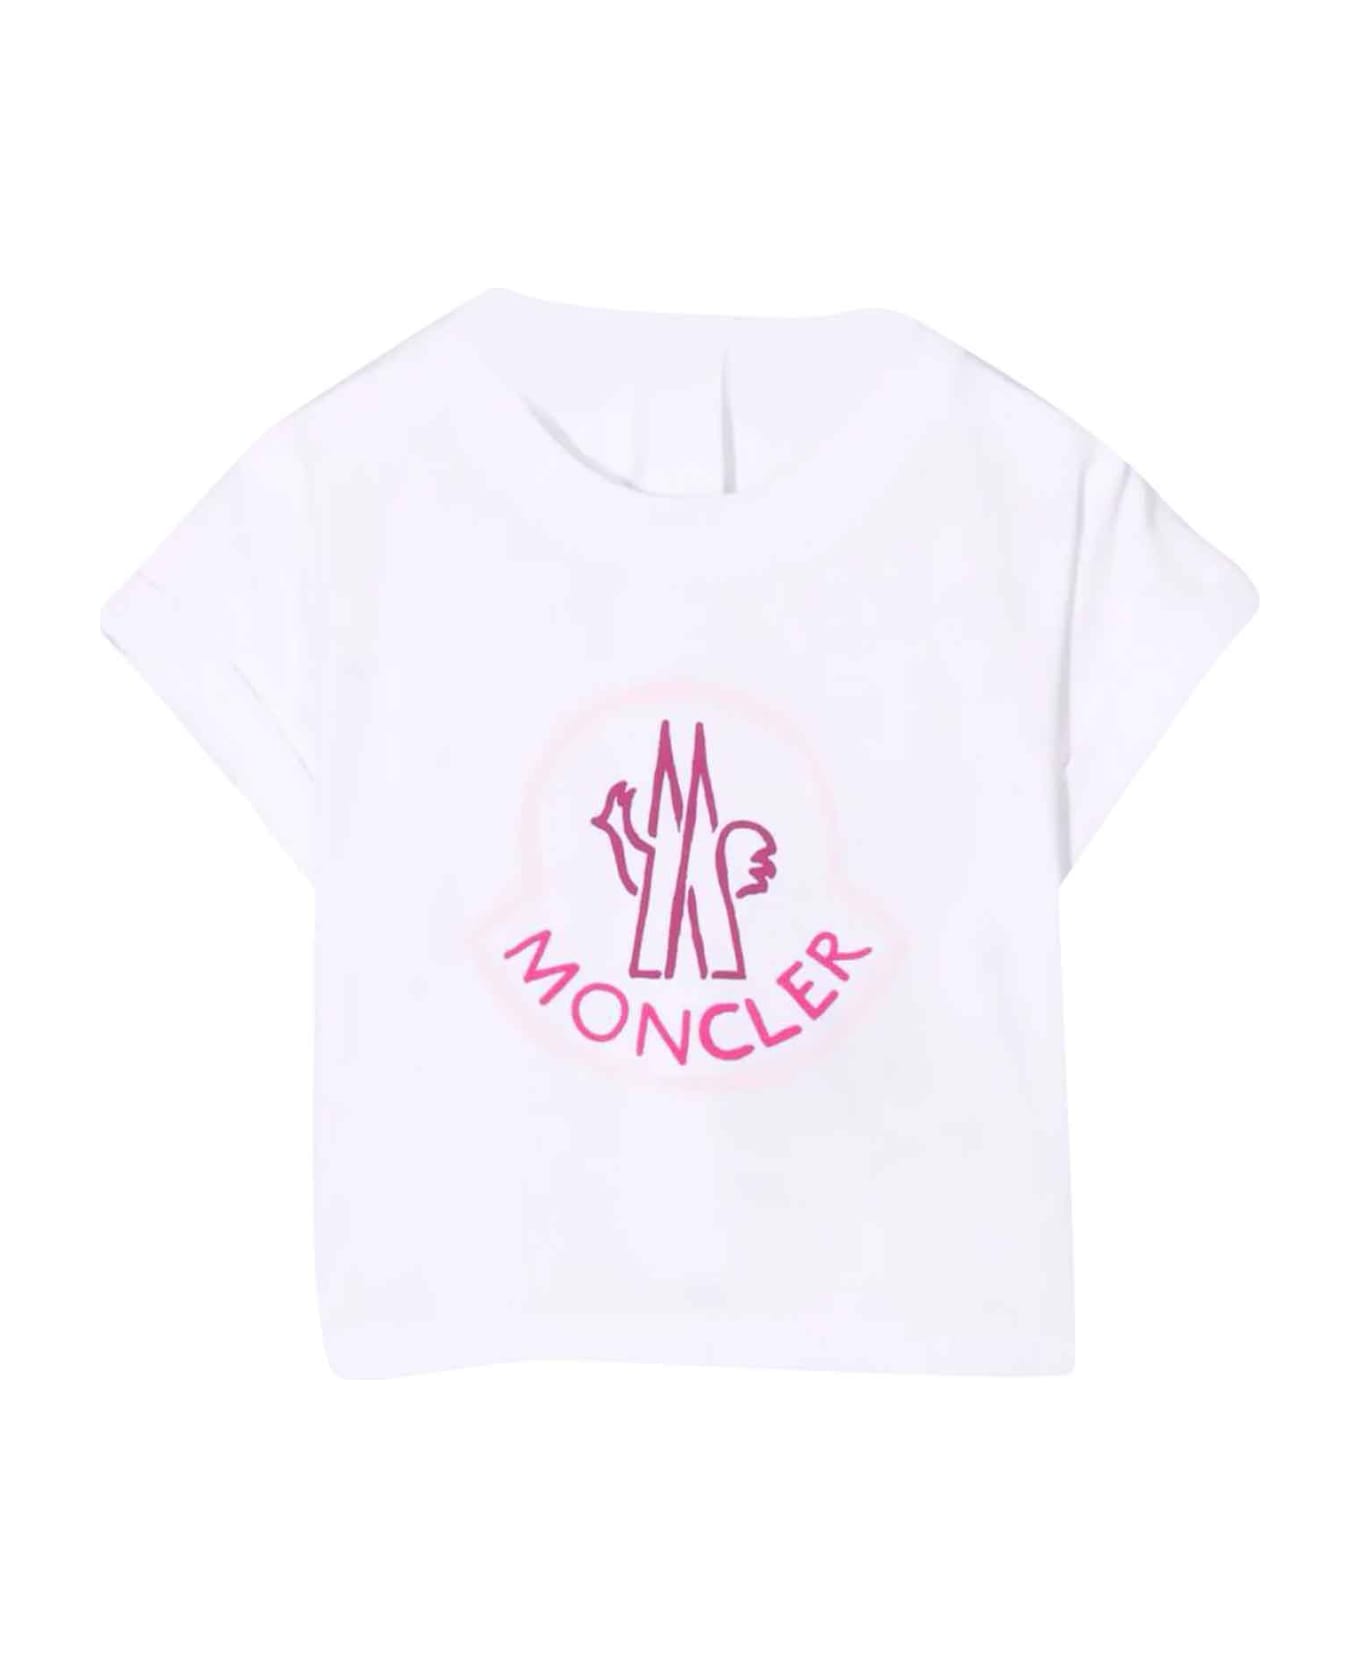 Moncler White T-shirt Baby Unisex - WHITE